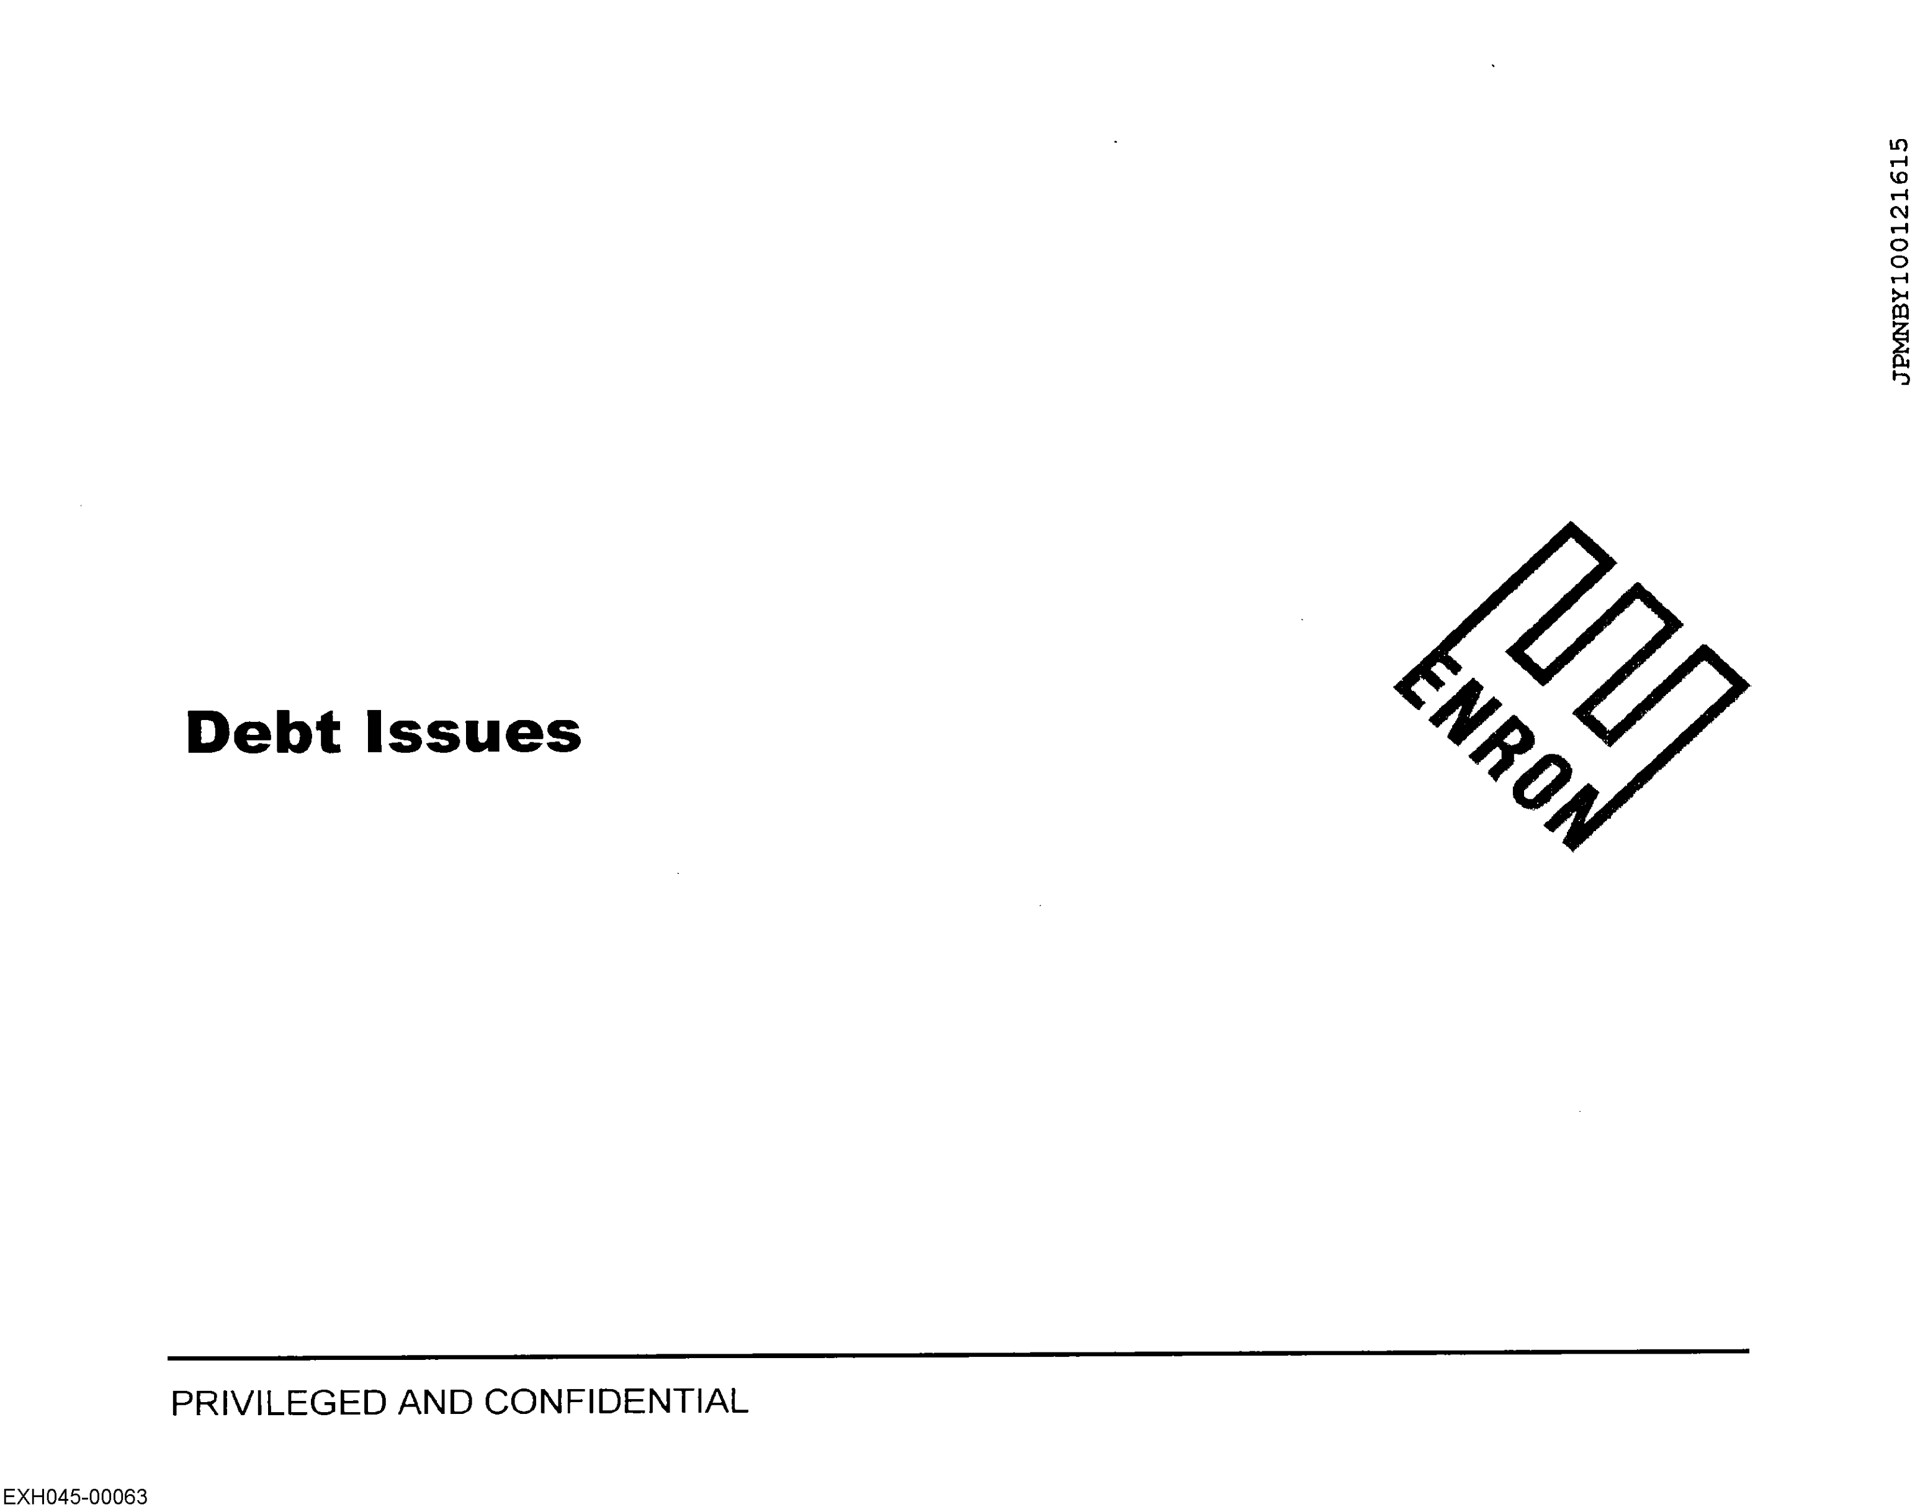 debt issues | Enron